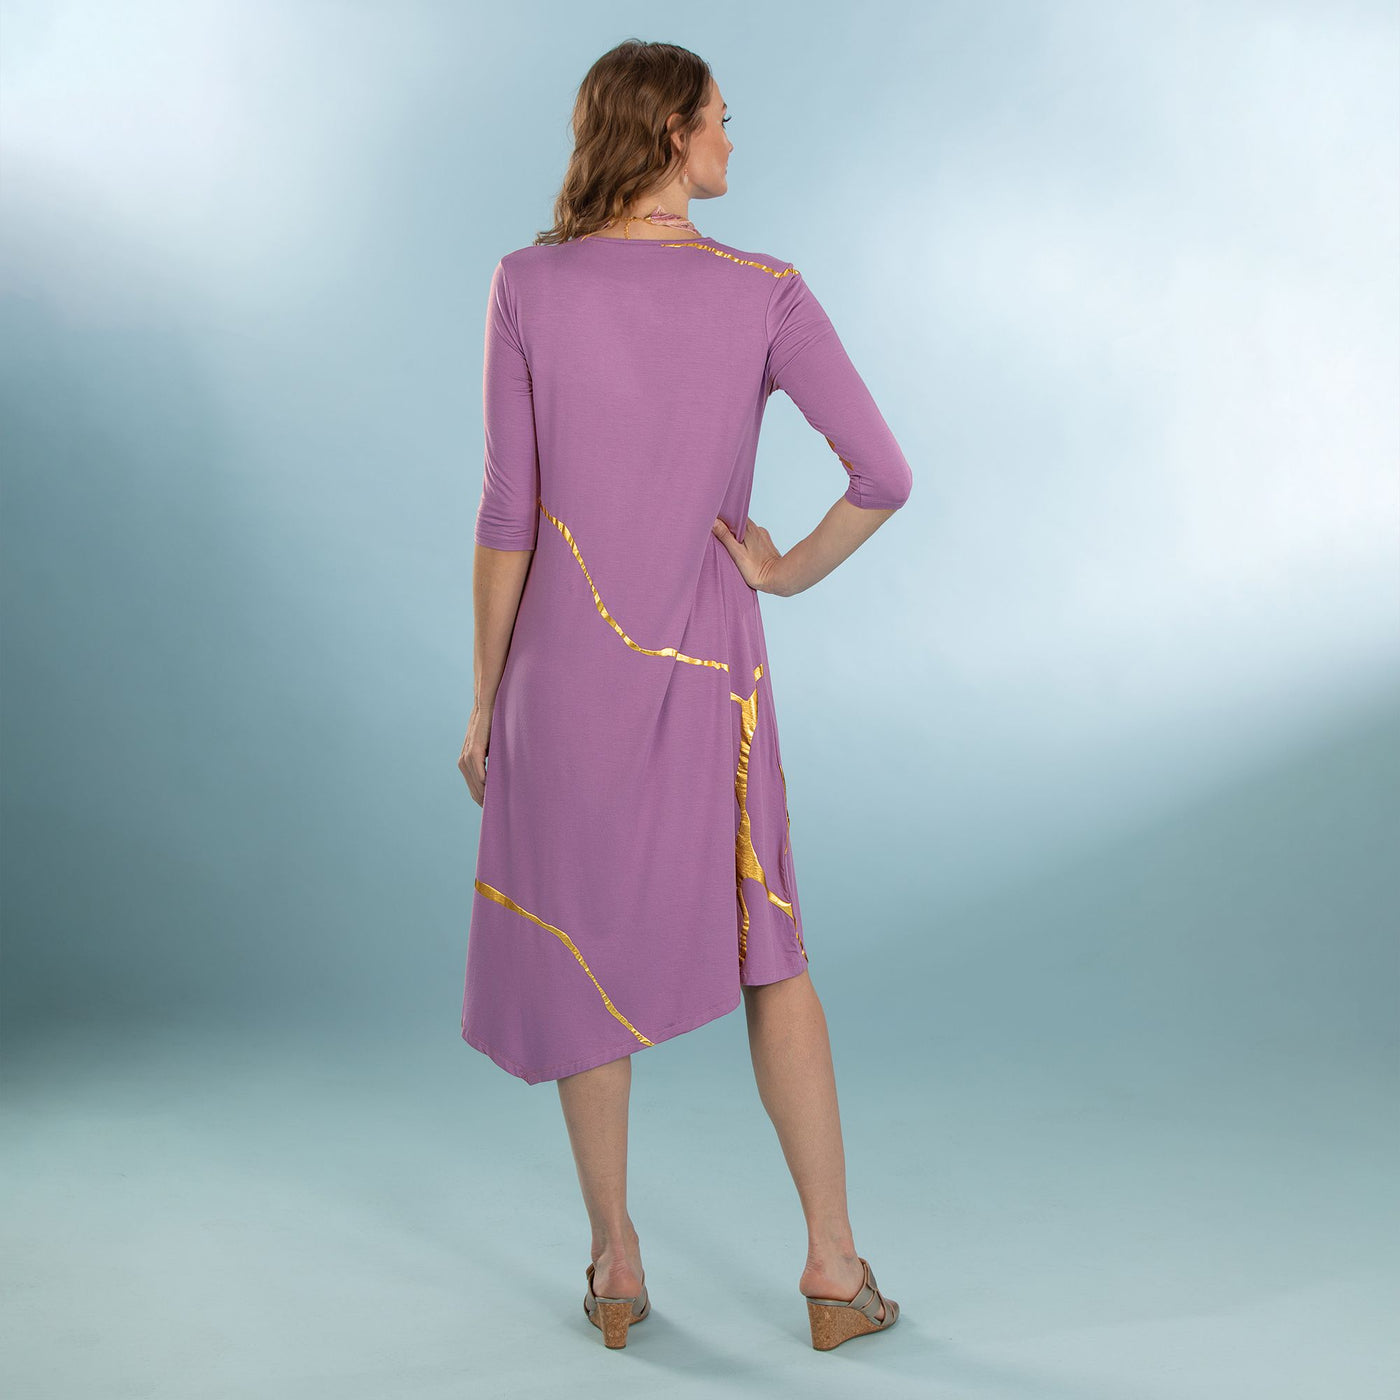 Kintsugi-Inspired Lilac Dress